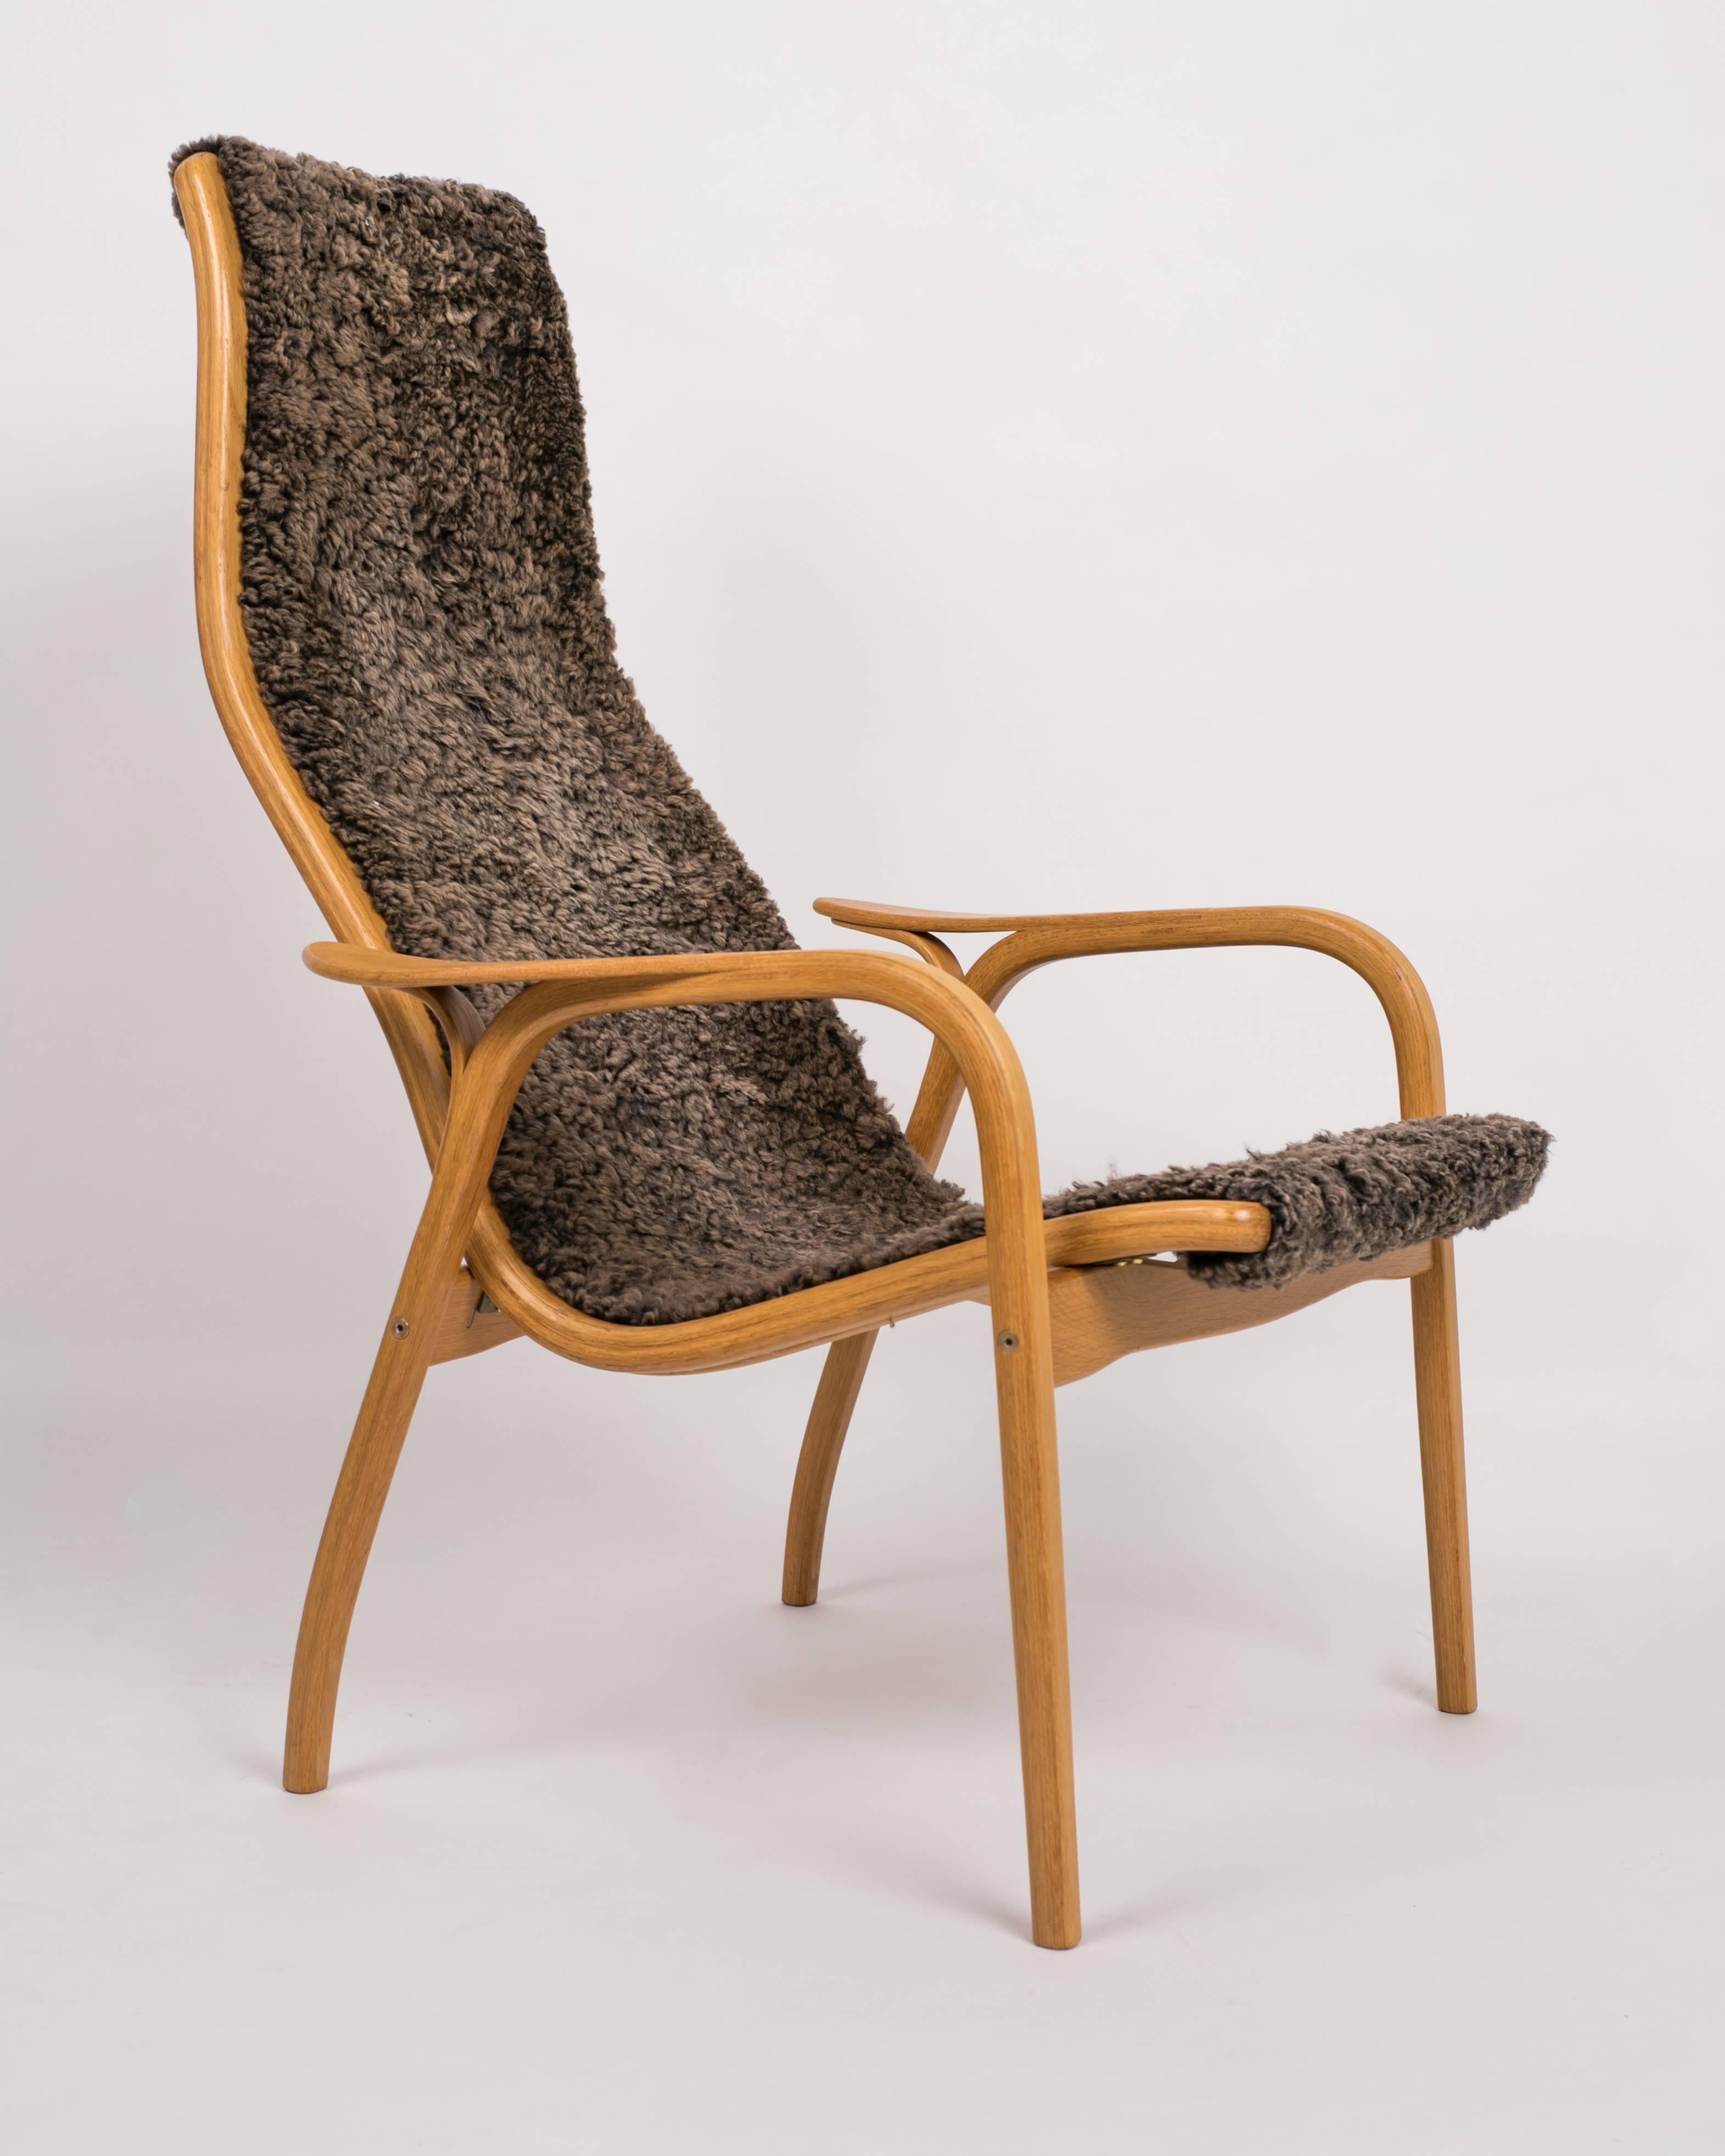 Laminated Yngve Ekström Lamino Chair and Ottoman with Sheepskin Upholstery